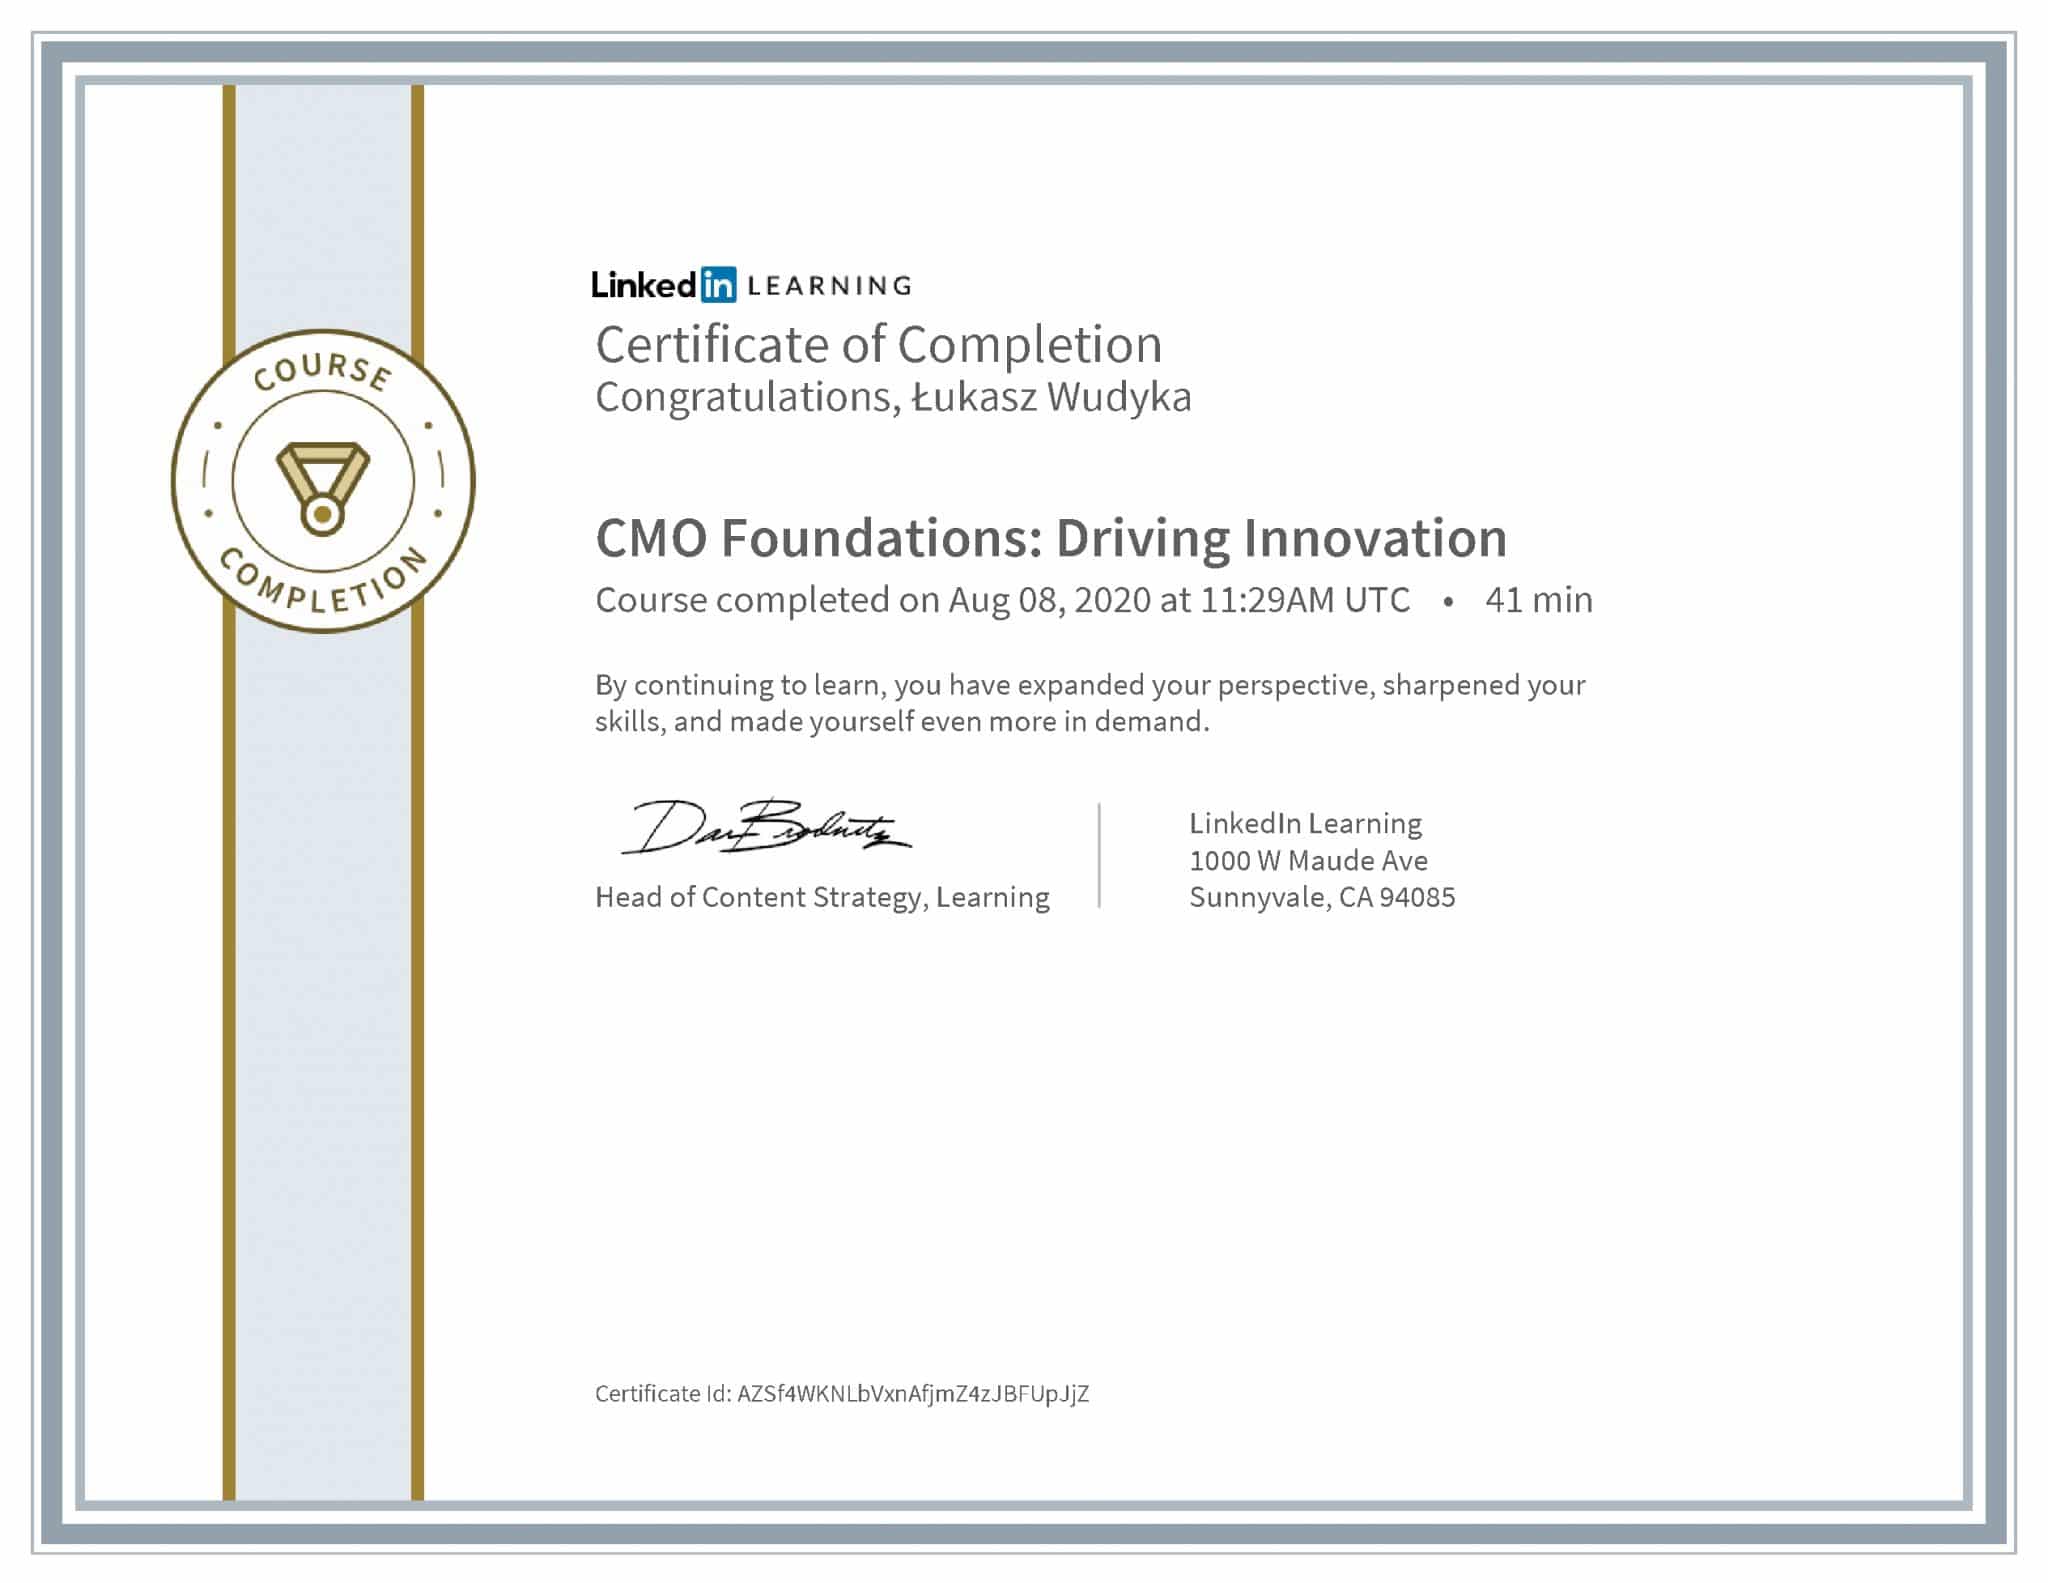 Łukasz Wudyka certyfikat LinkedIn CMO Foundations: Driving Innovation